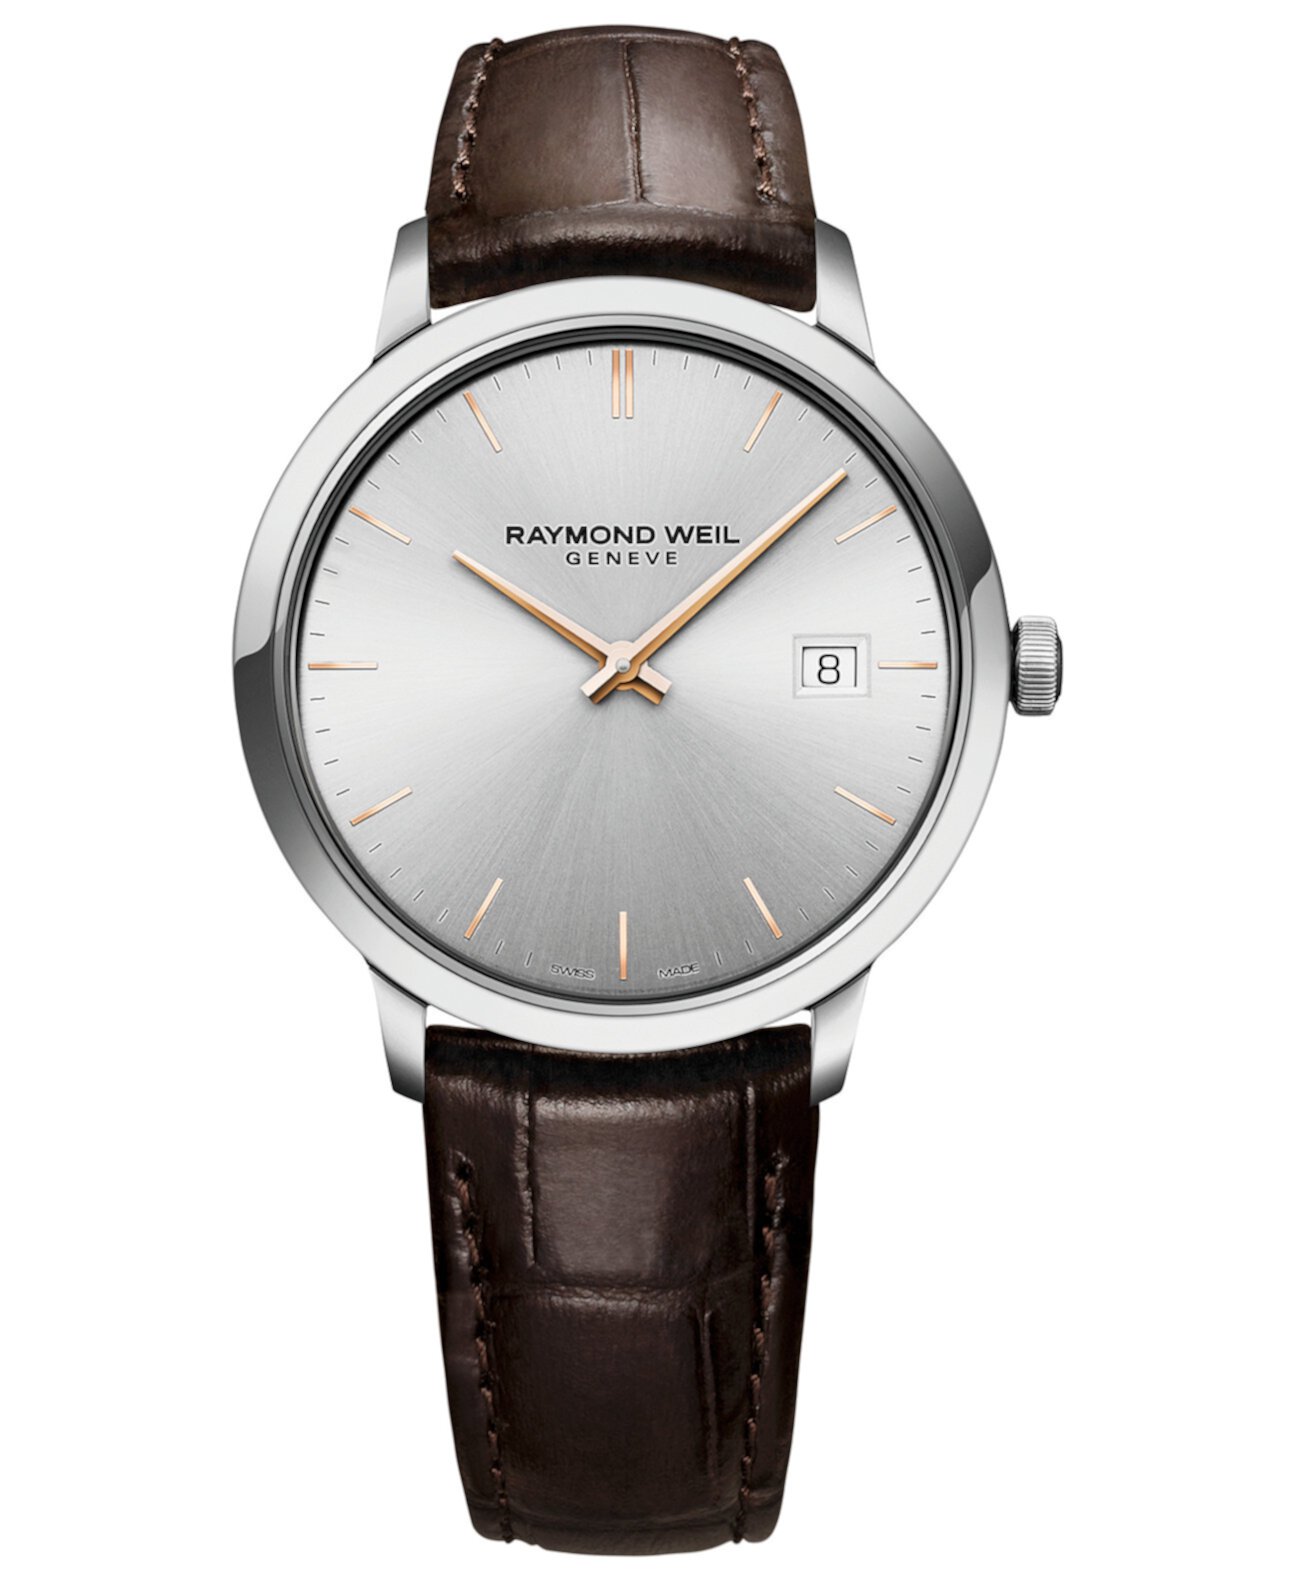 Мужские швейцарские часы Toccata Brown с кожаным ремешком 39мм Raymond Weil